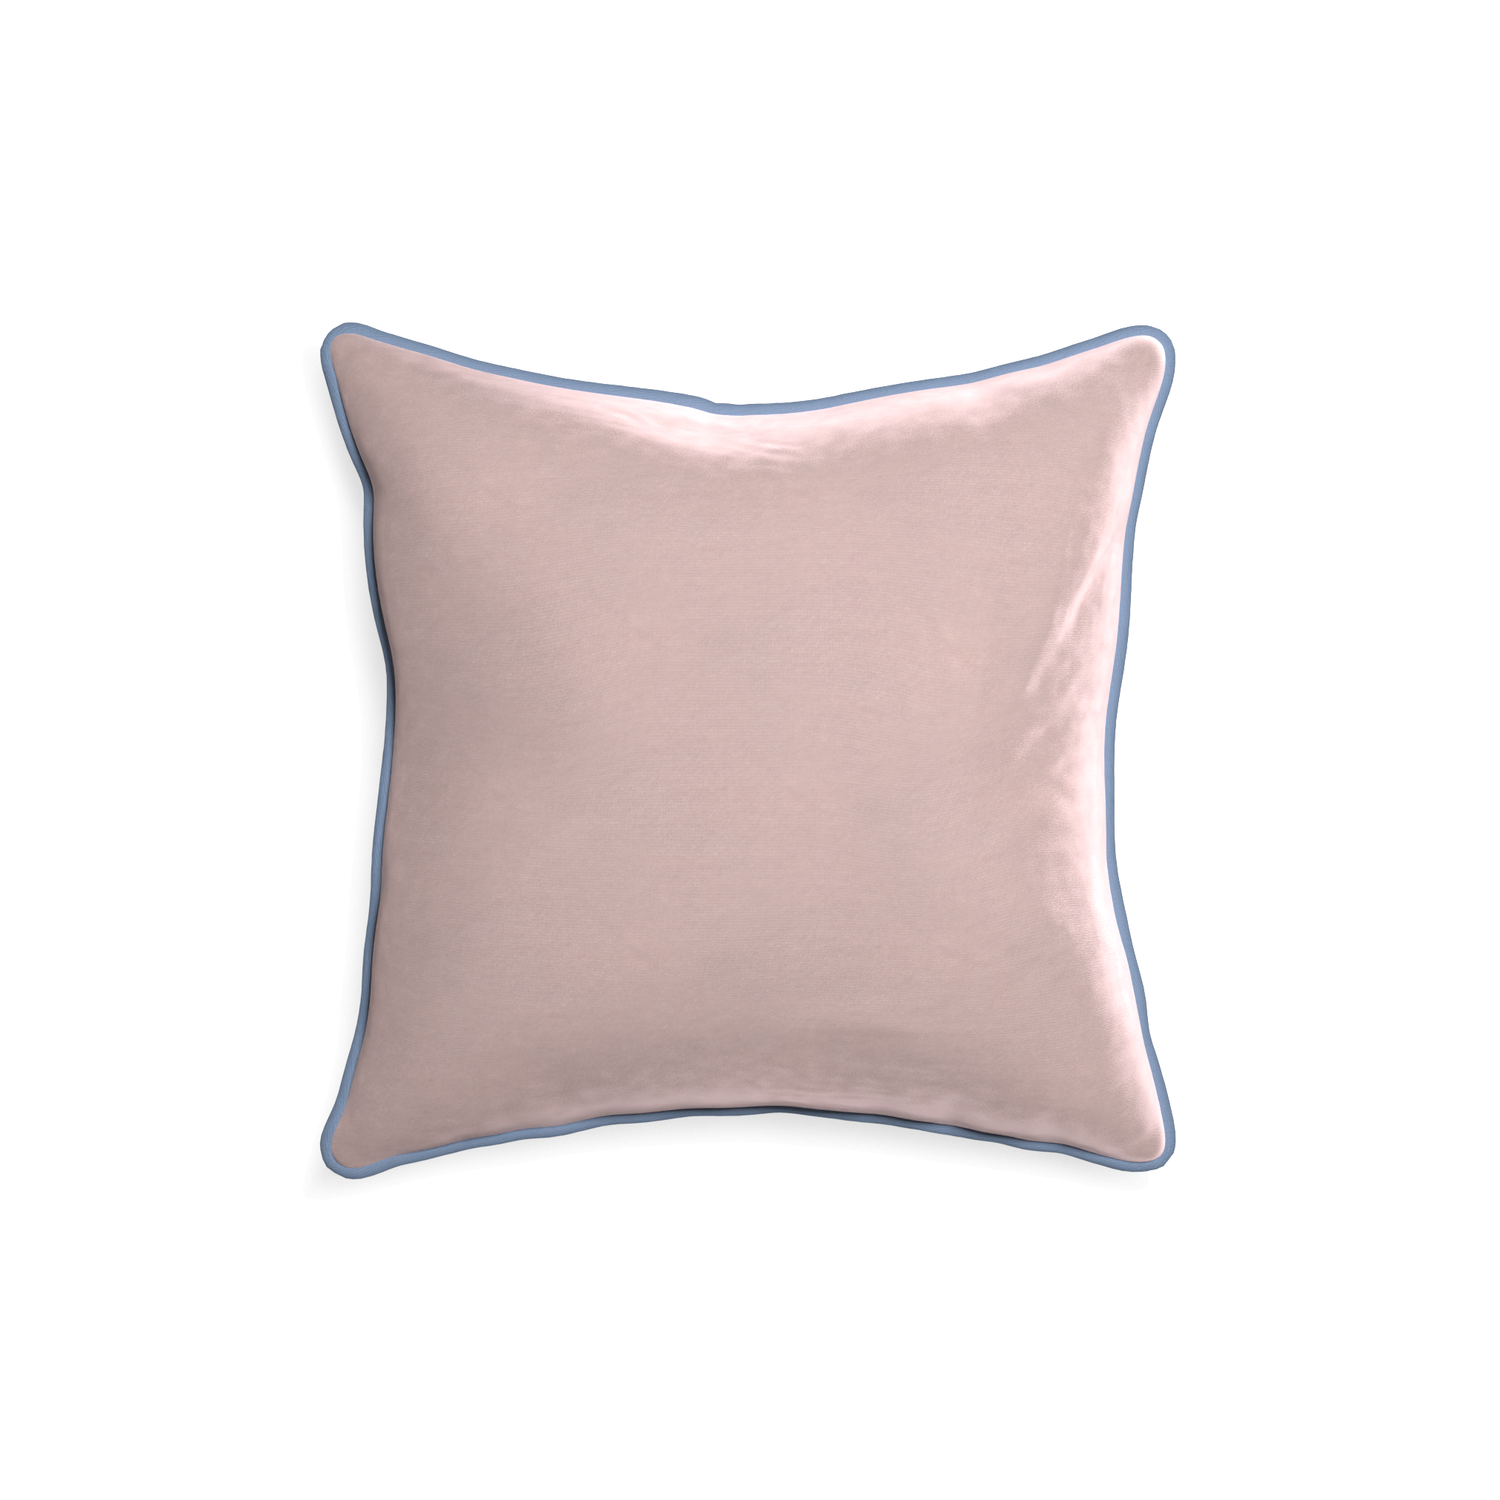 18-square rose velvet custom pillow with sky piping on white background